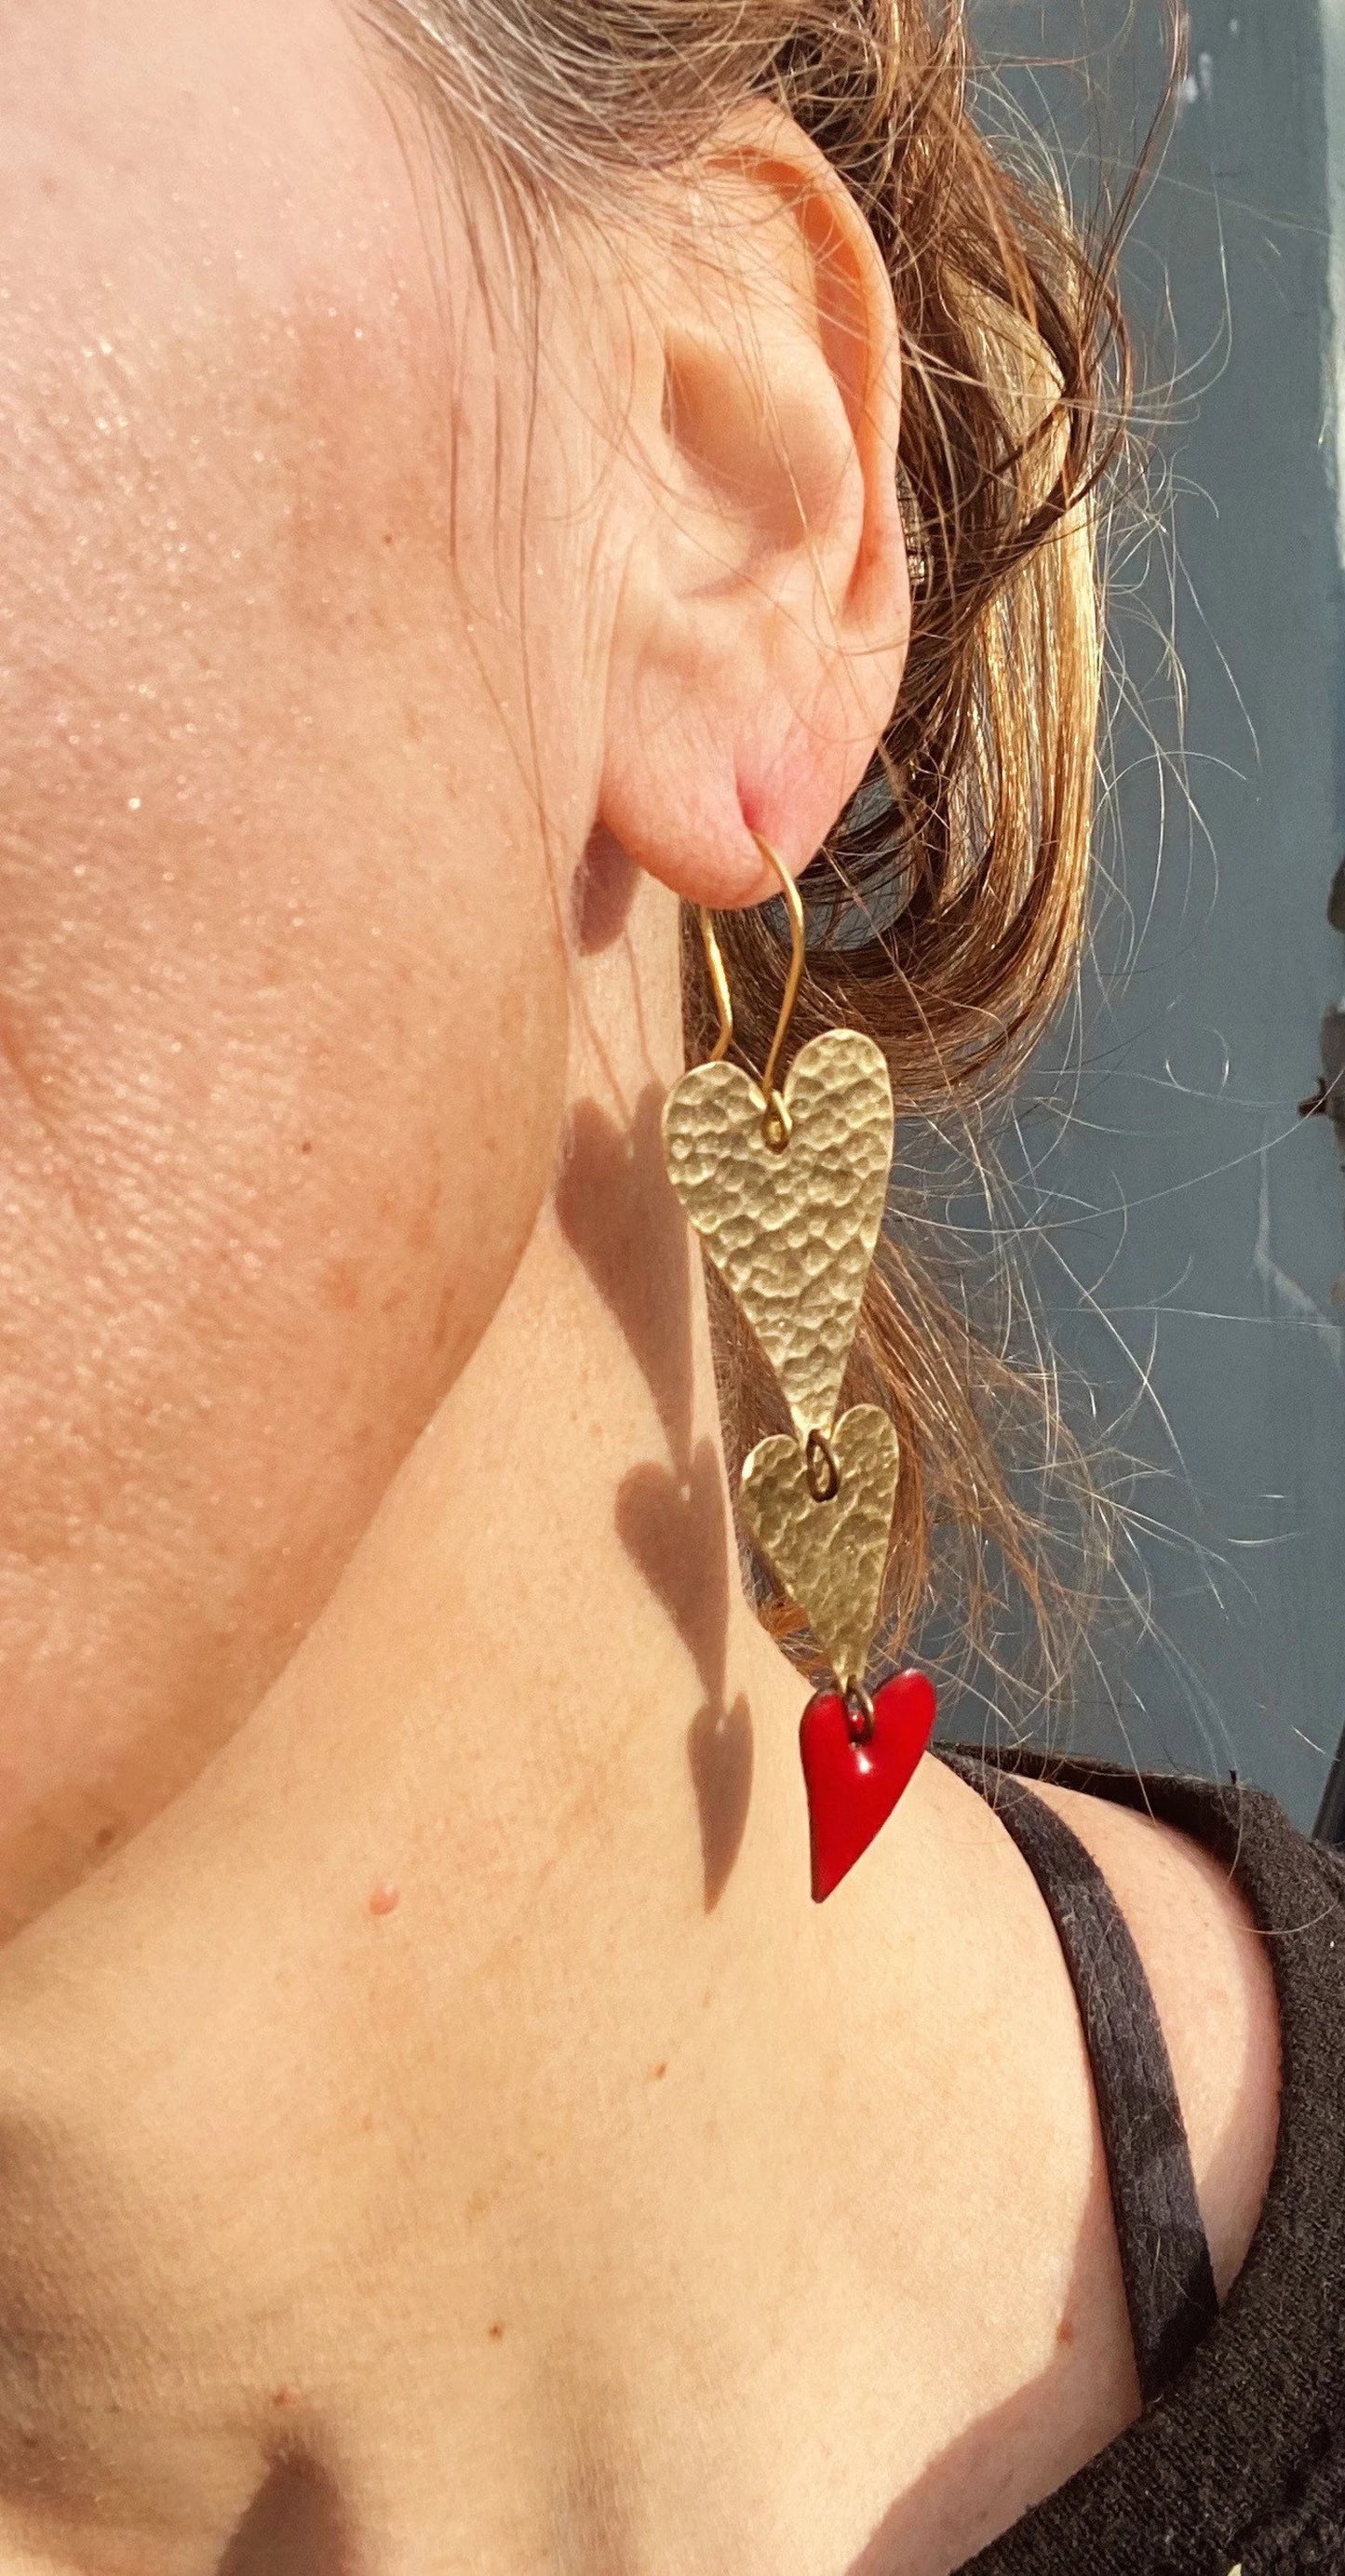 Heart drop earrings in brass with a pop of color!